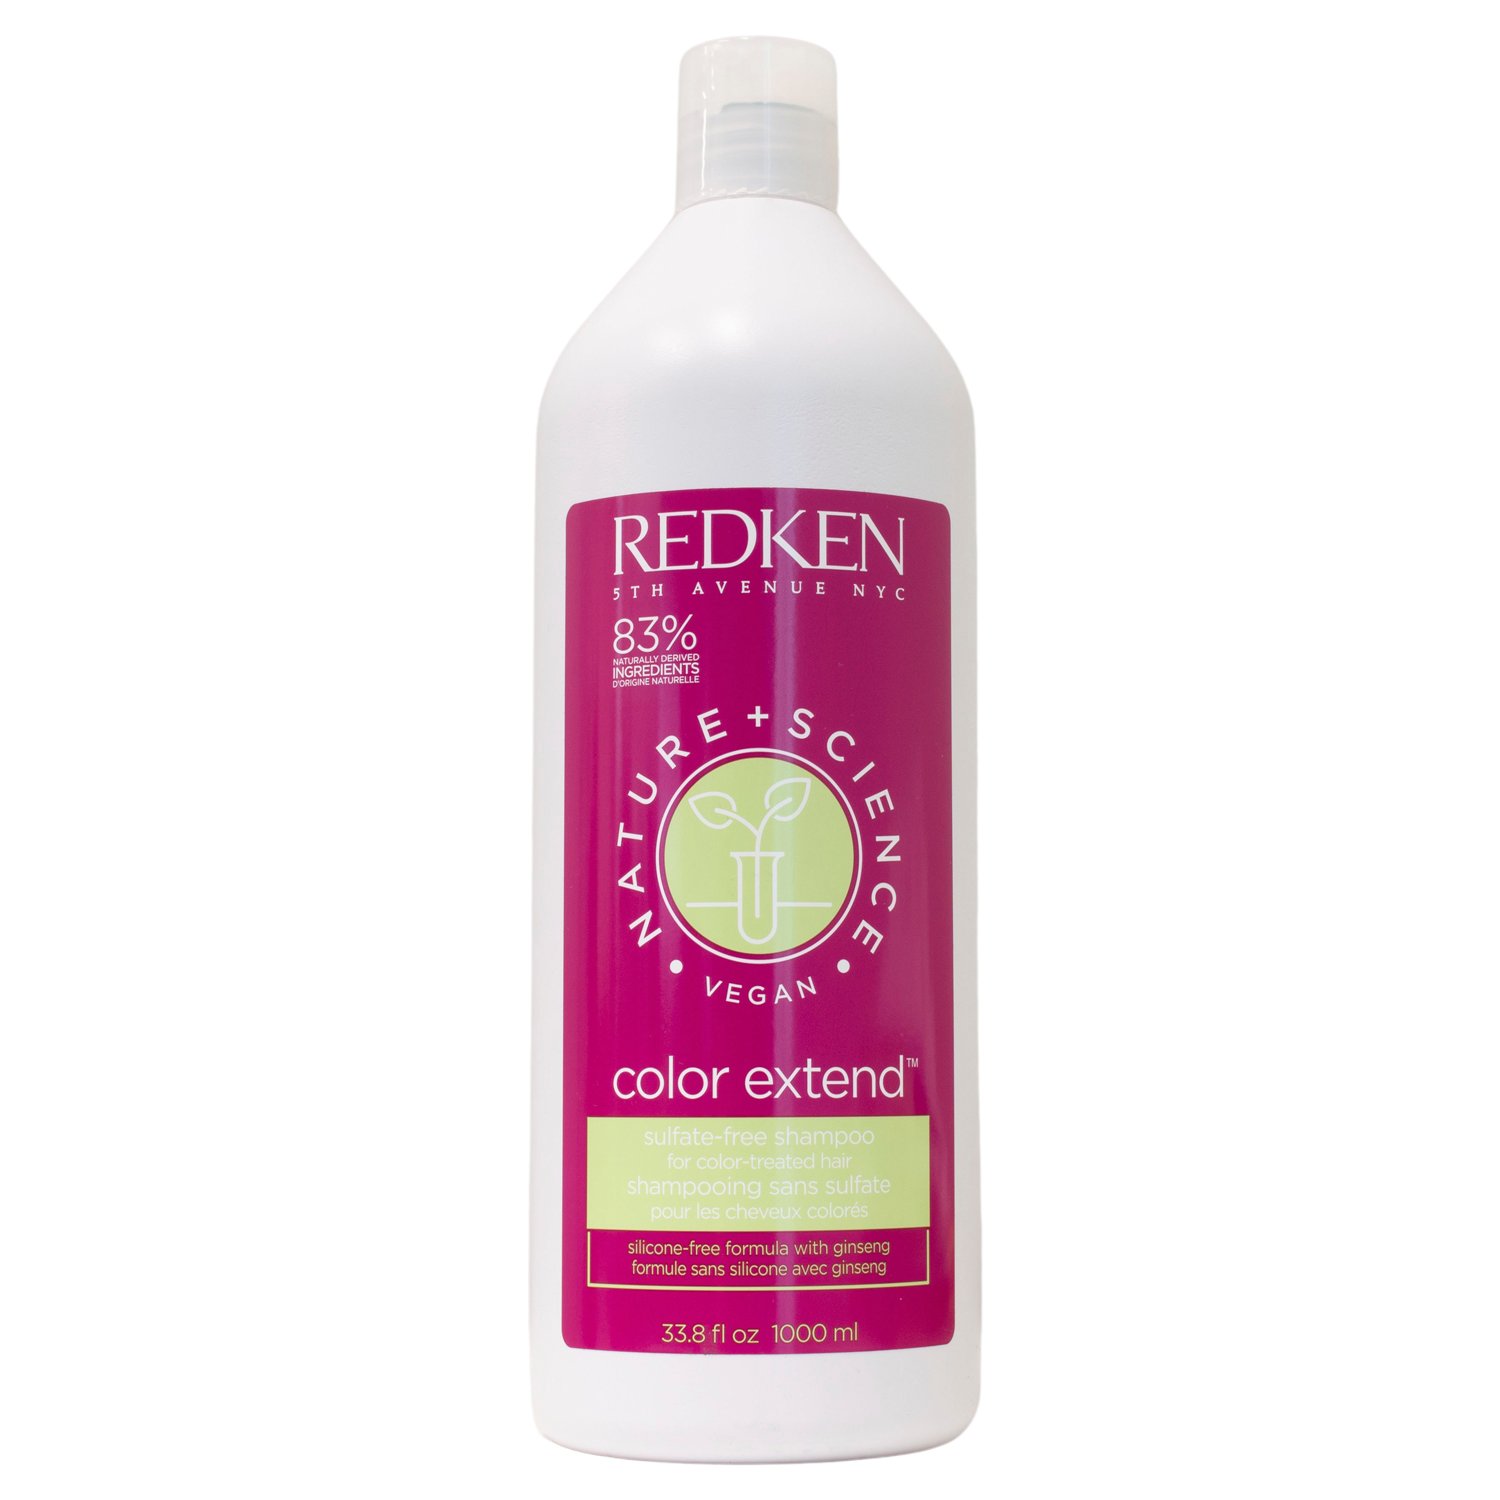 Redken Vegan Color Extend Shampoo - Shop Shampoo & Conditioner at